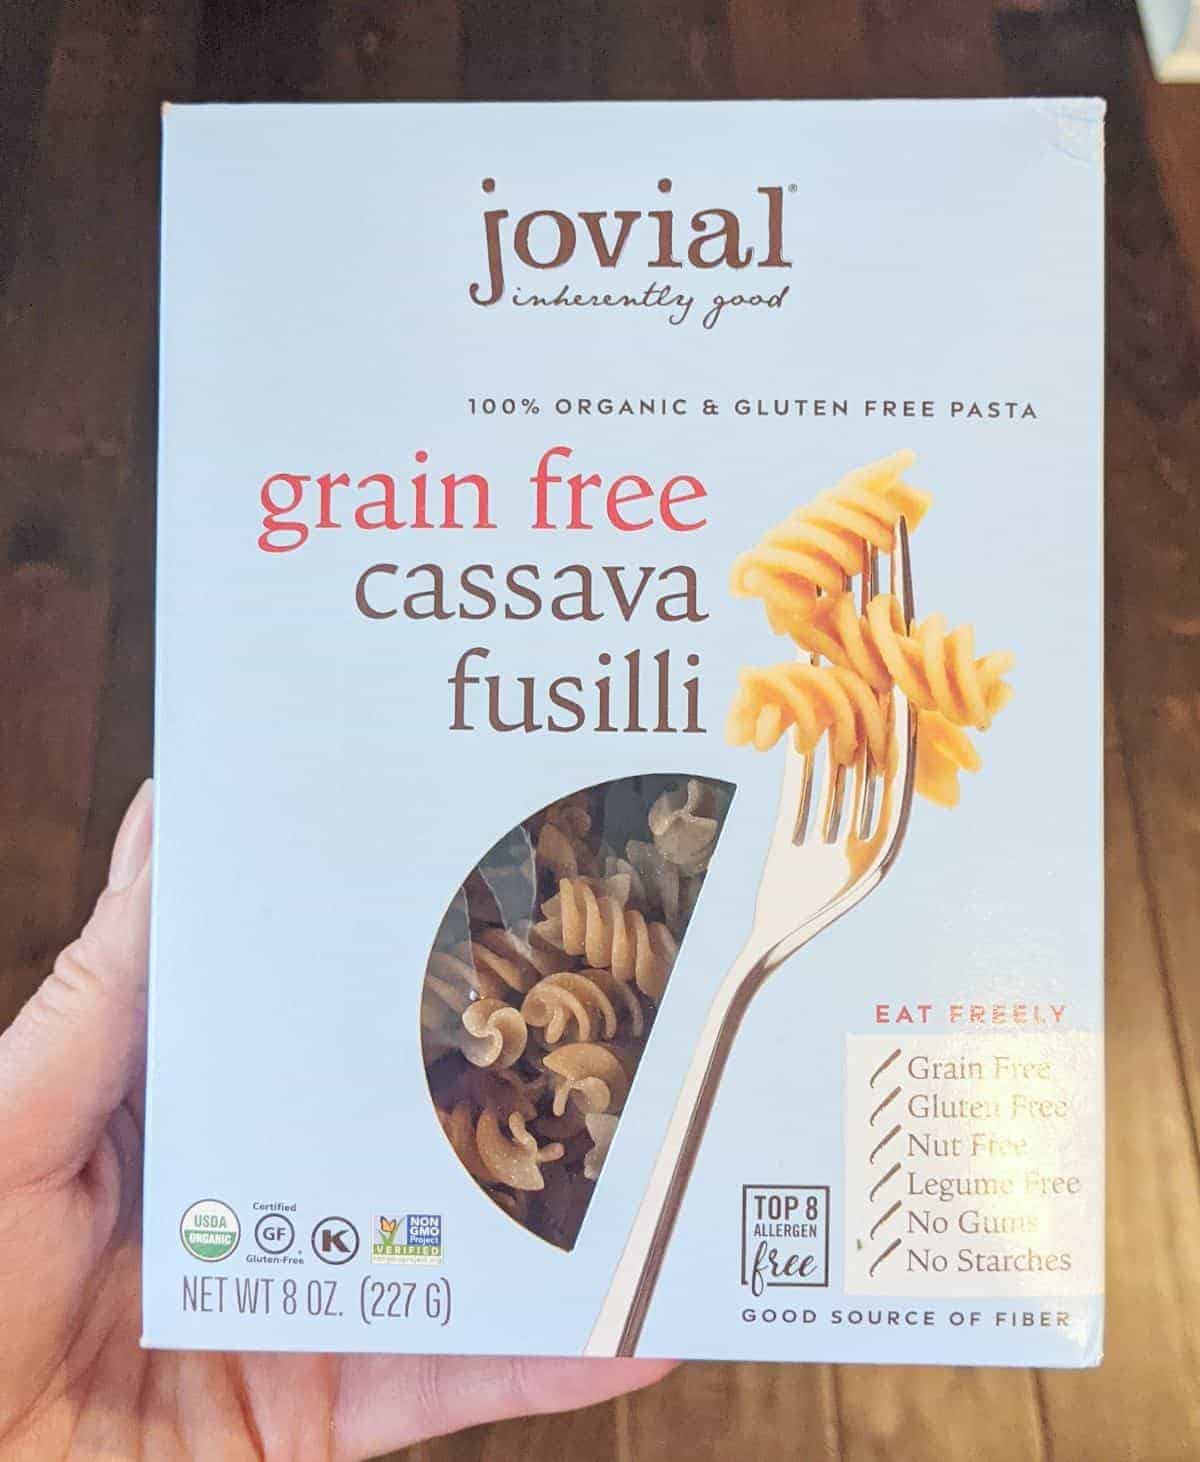 Box of Jovial Foods Grain free cassava fusilli pasta.